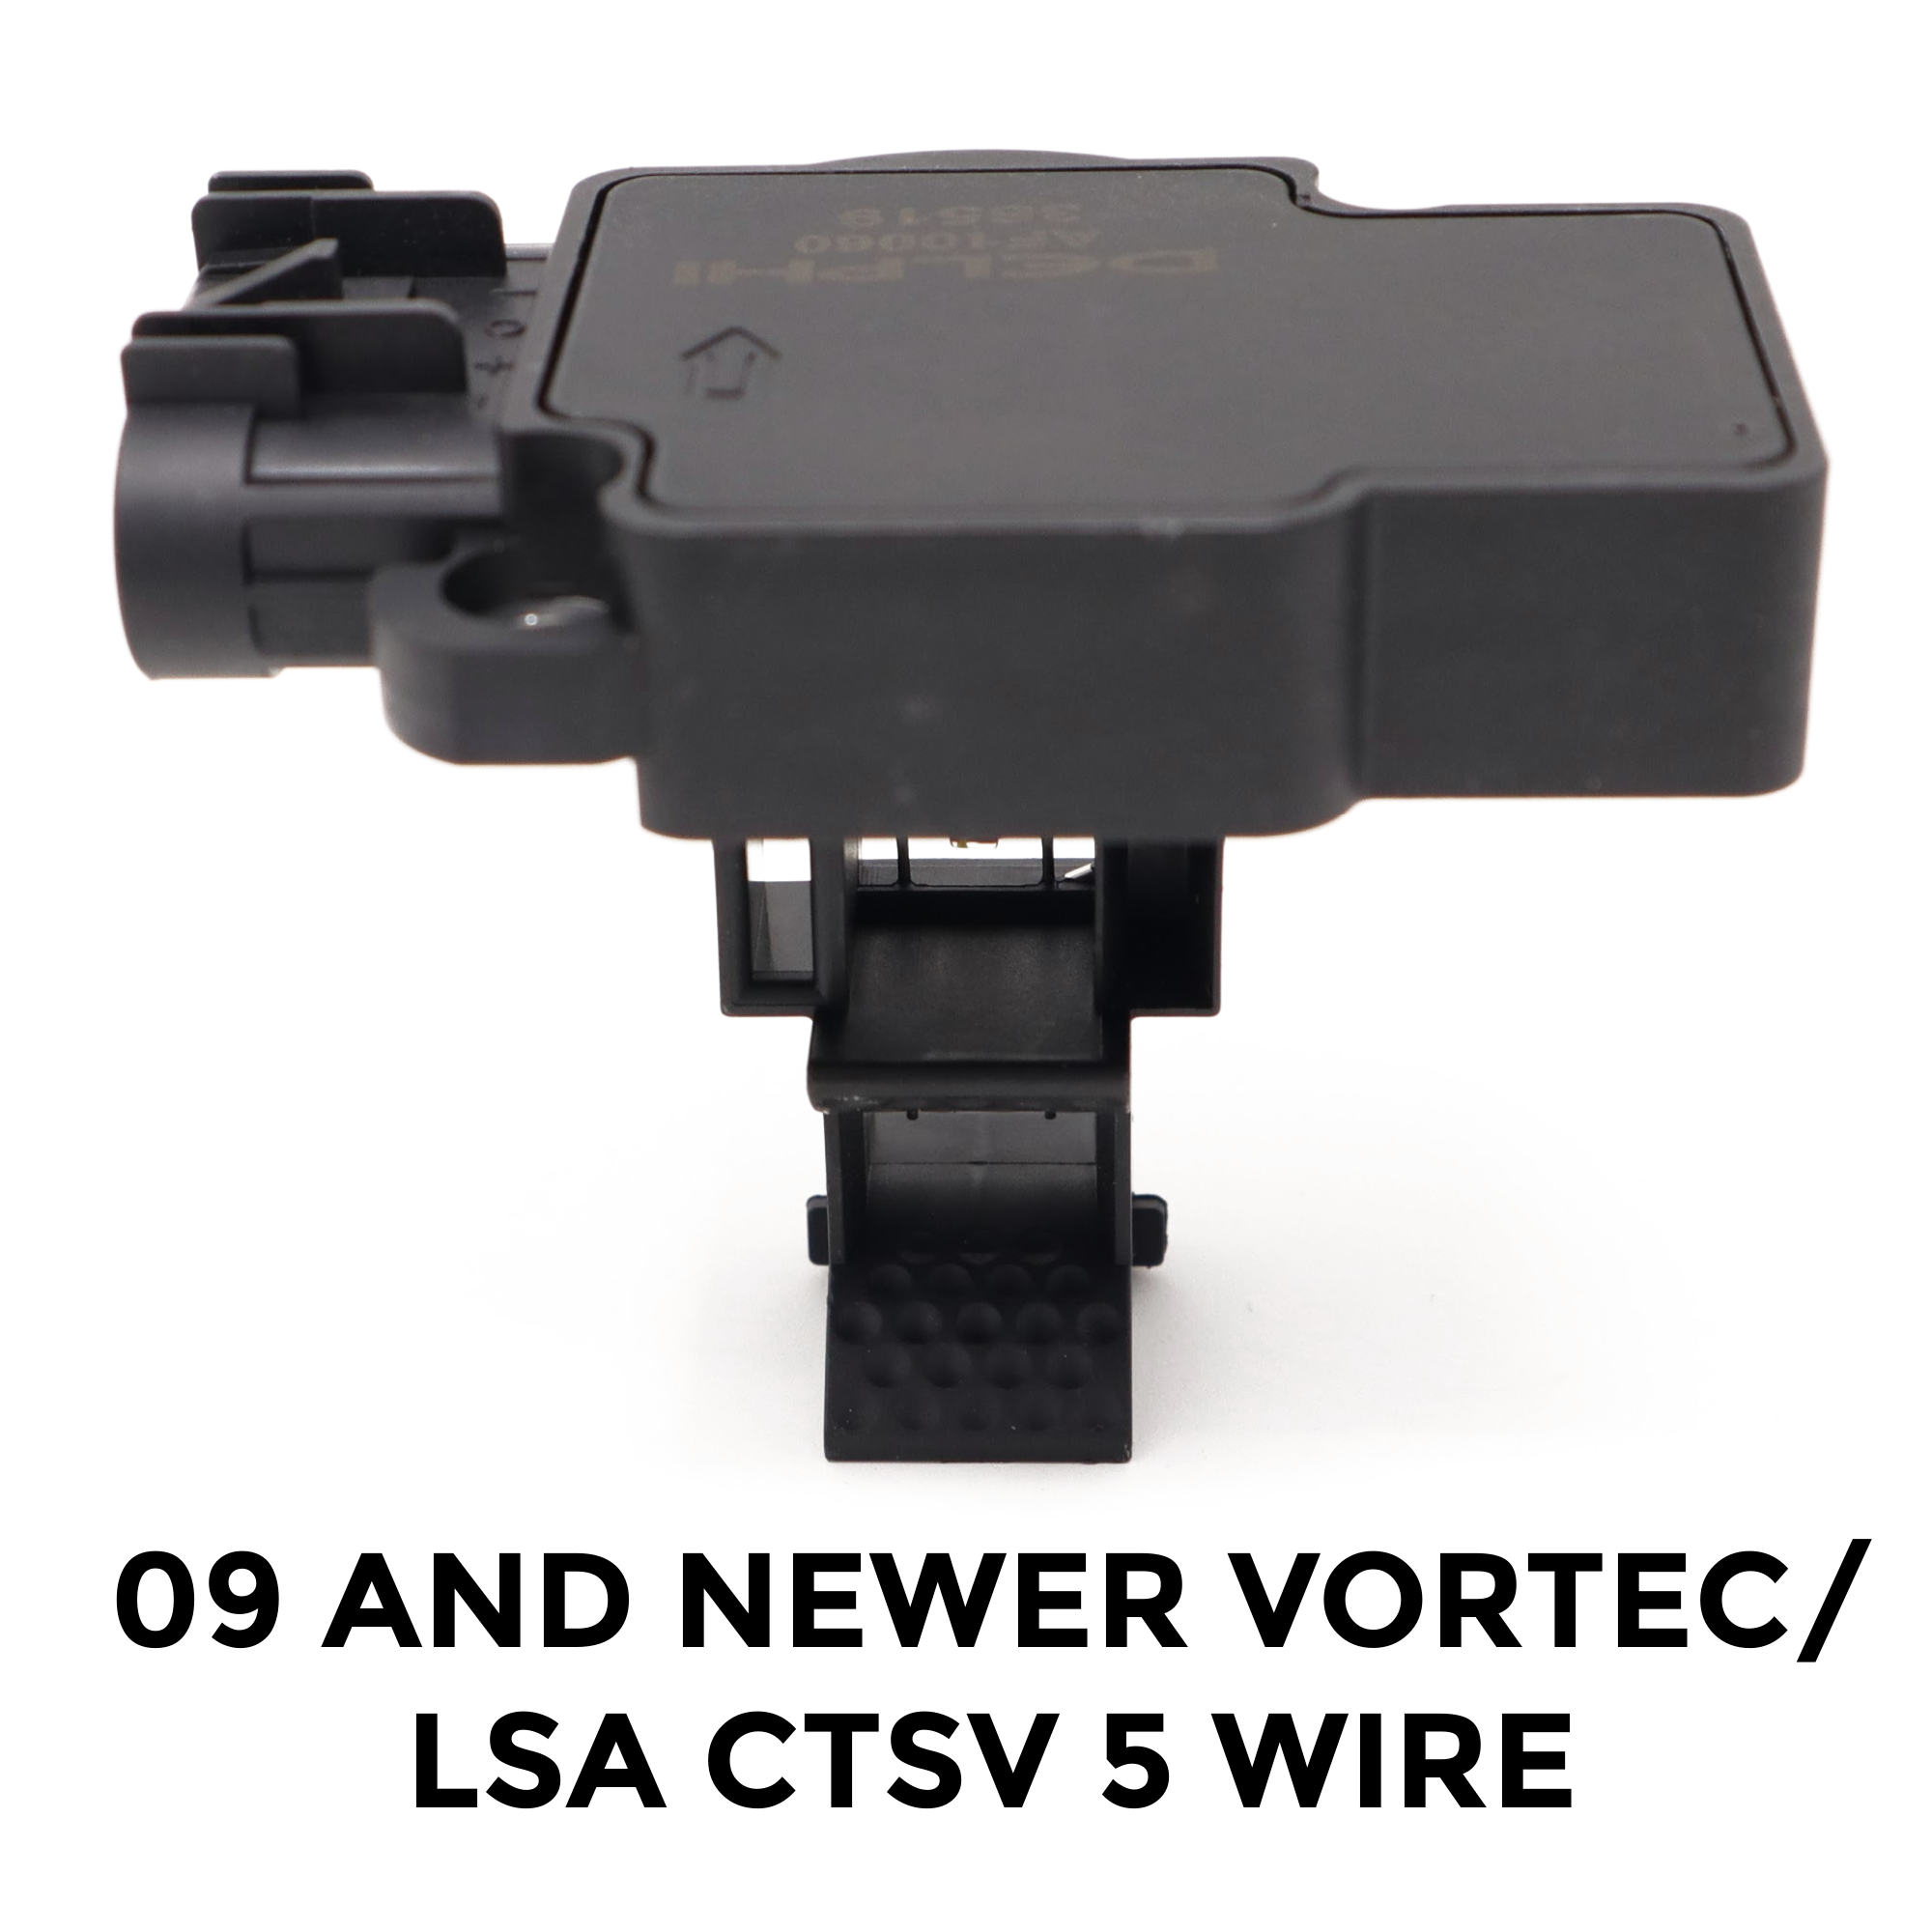 09 and Newer Vortec/LSA CTSV $0.00